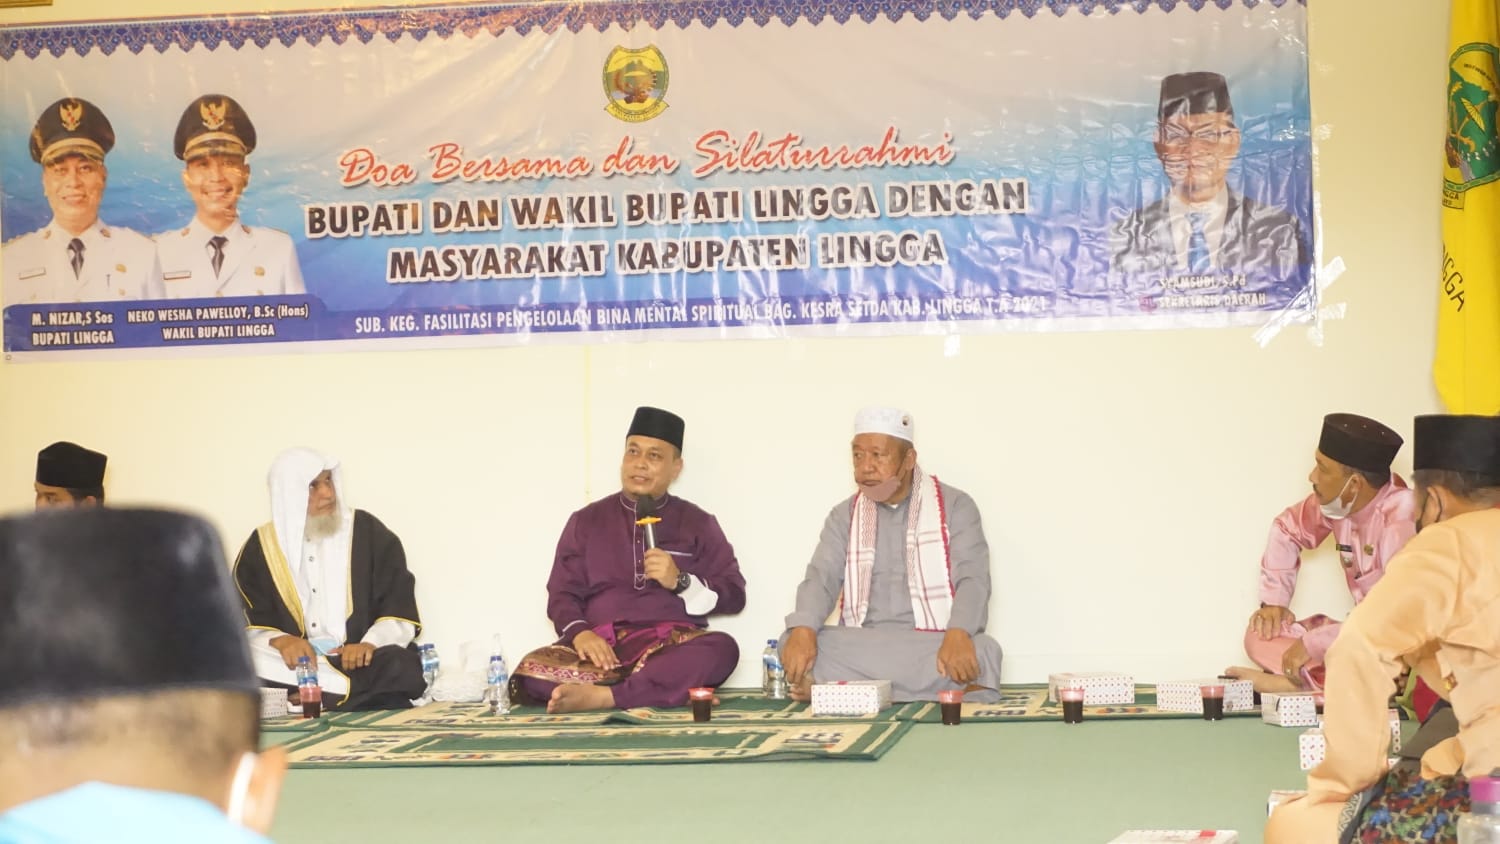 Bupati Lingga Doa Bersama akan Dibuat disetiap Wilayah Kabupaten Lingga Demi terajutnya Silaturahmi 